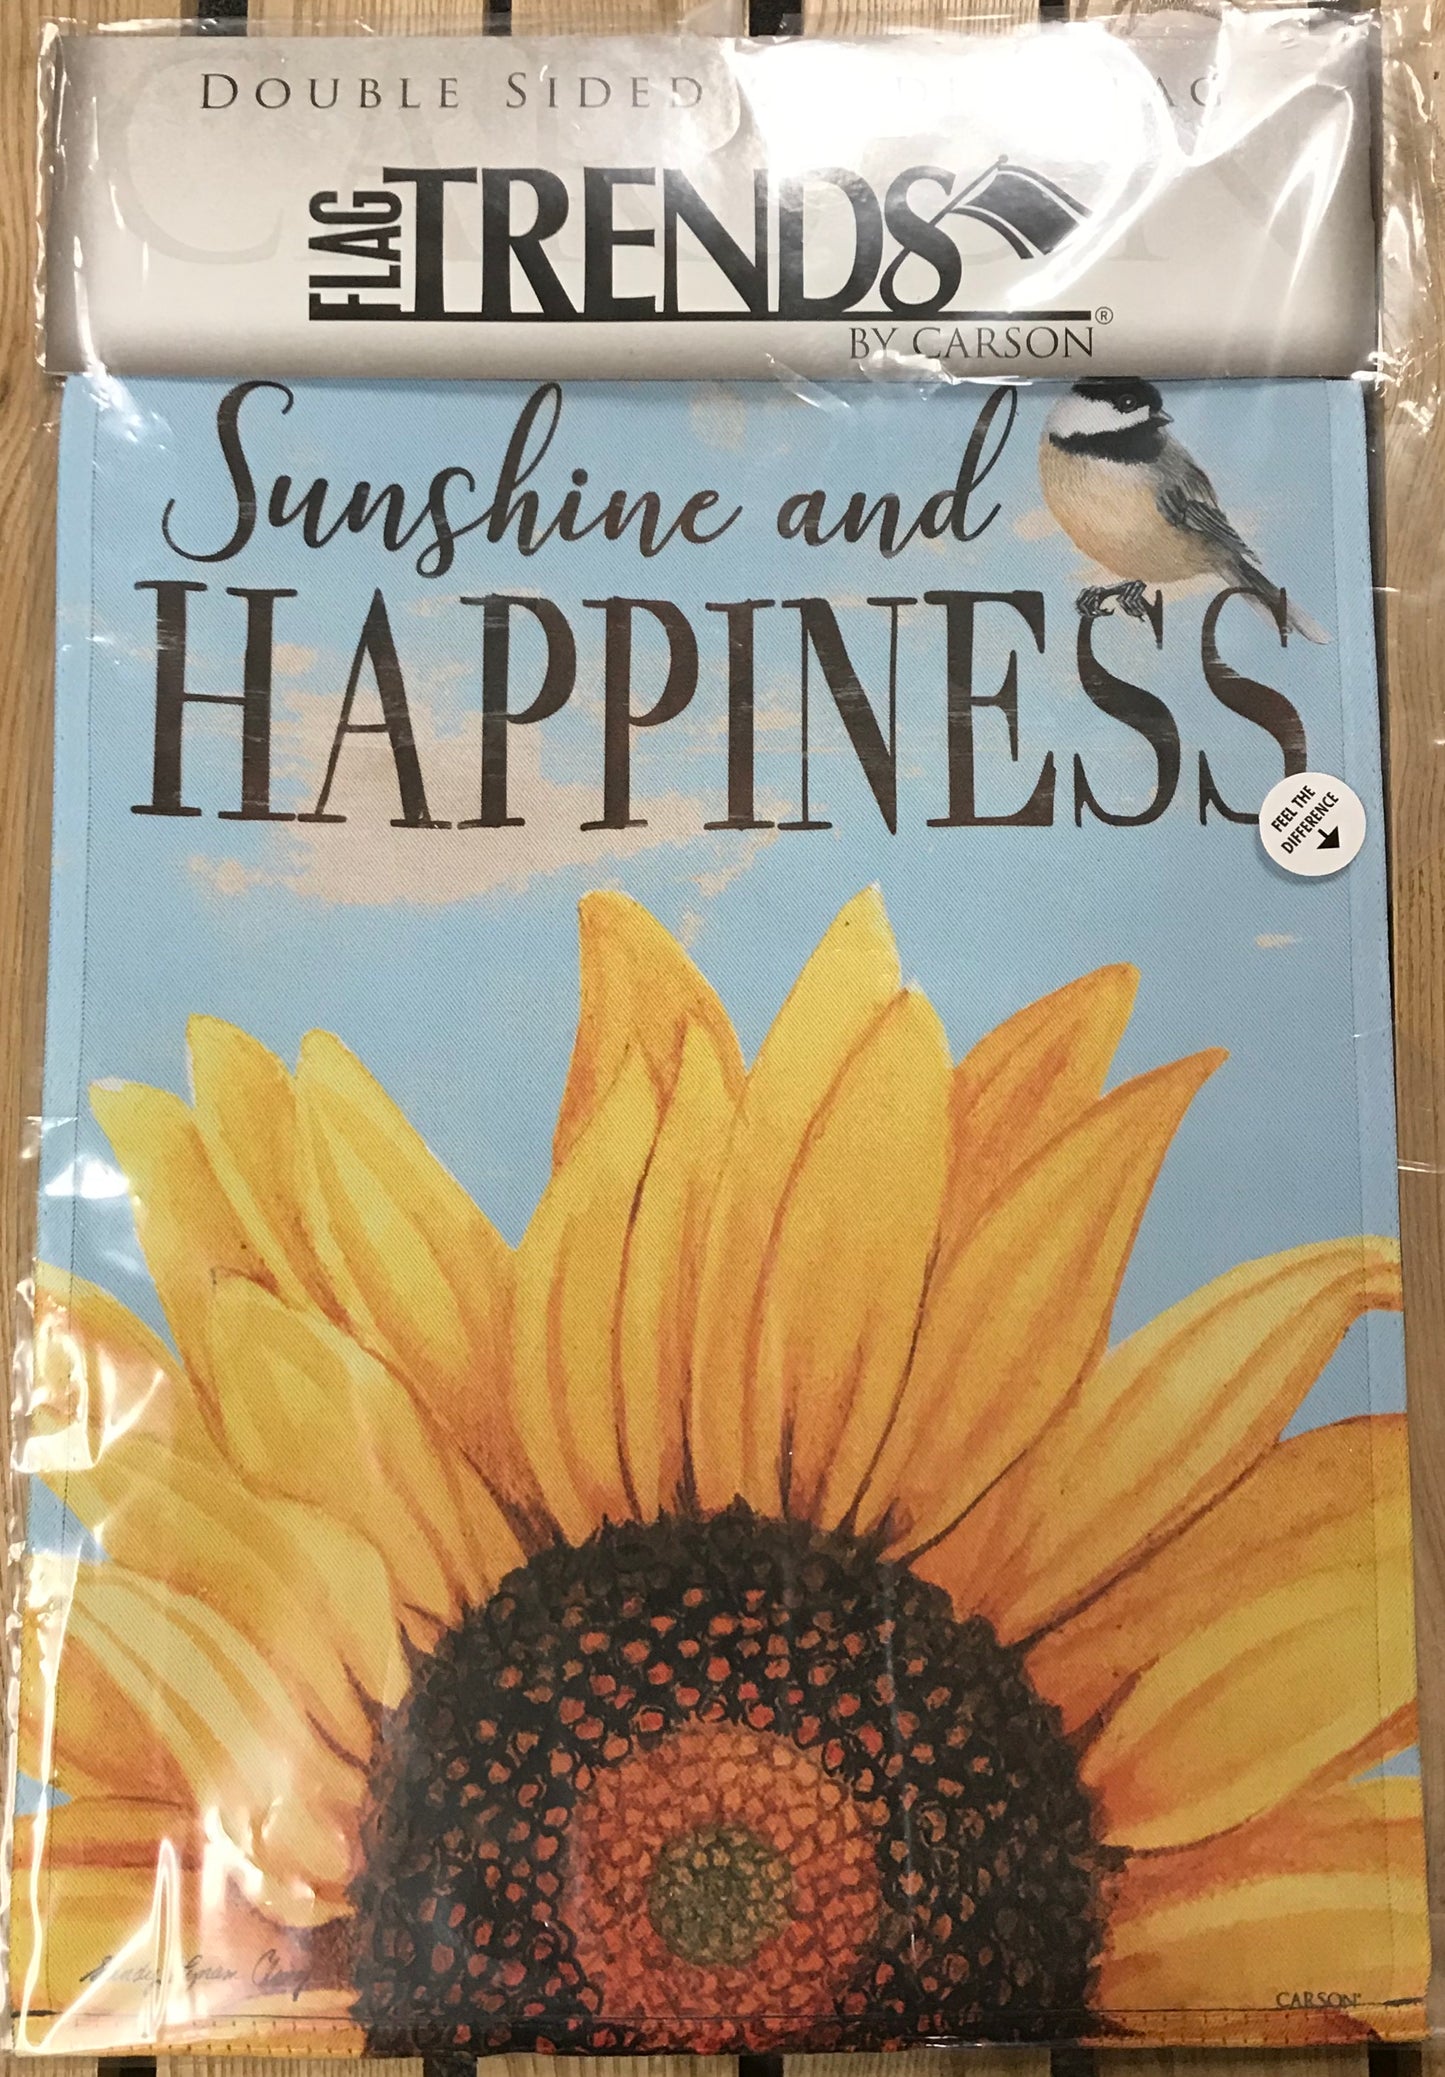 Garden Flag - "Sunshine and Happiness"